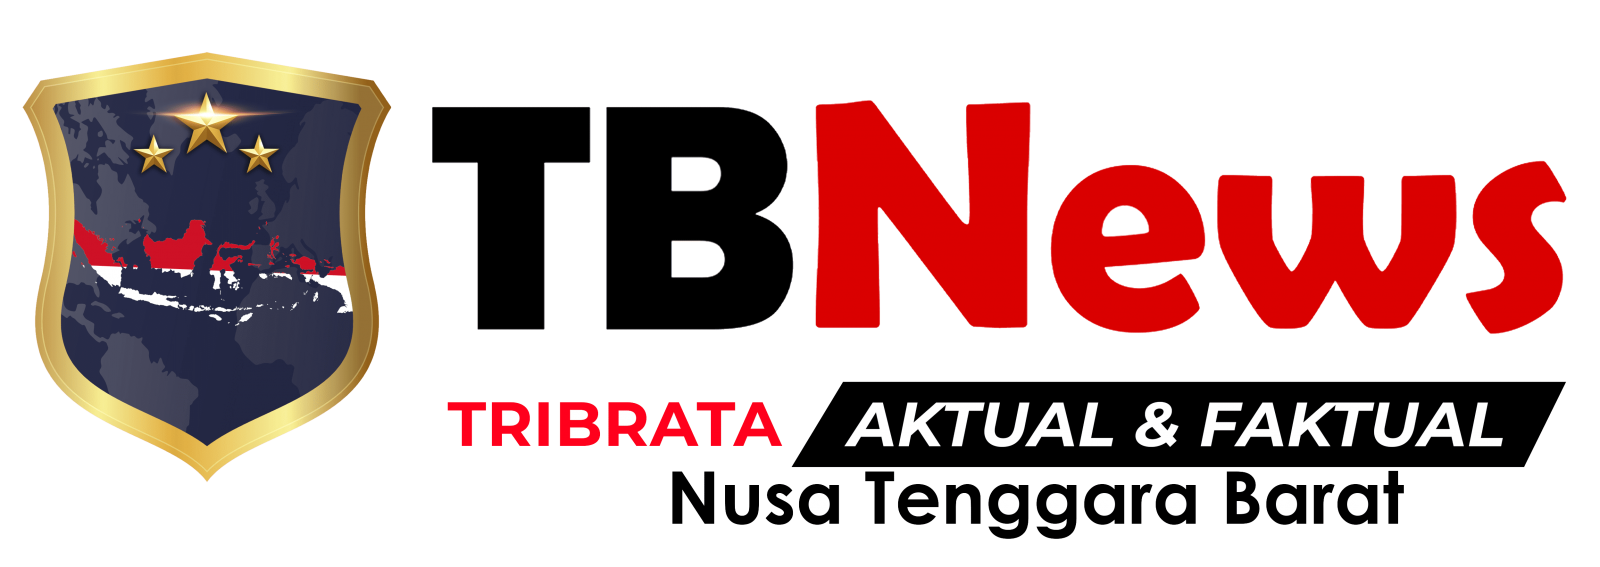 Tribrata News NTB